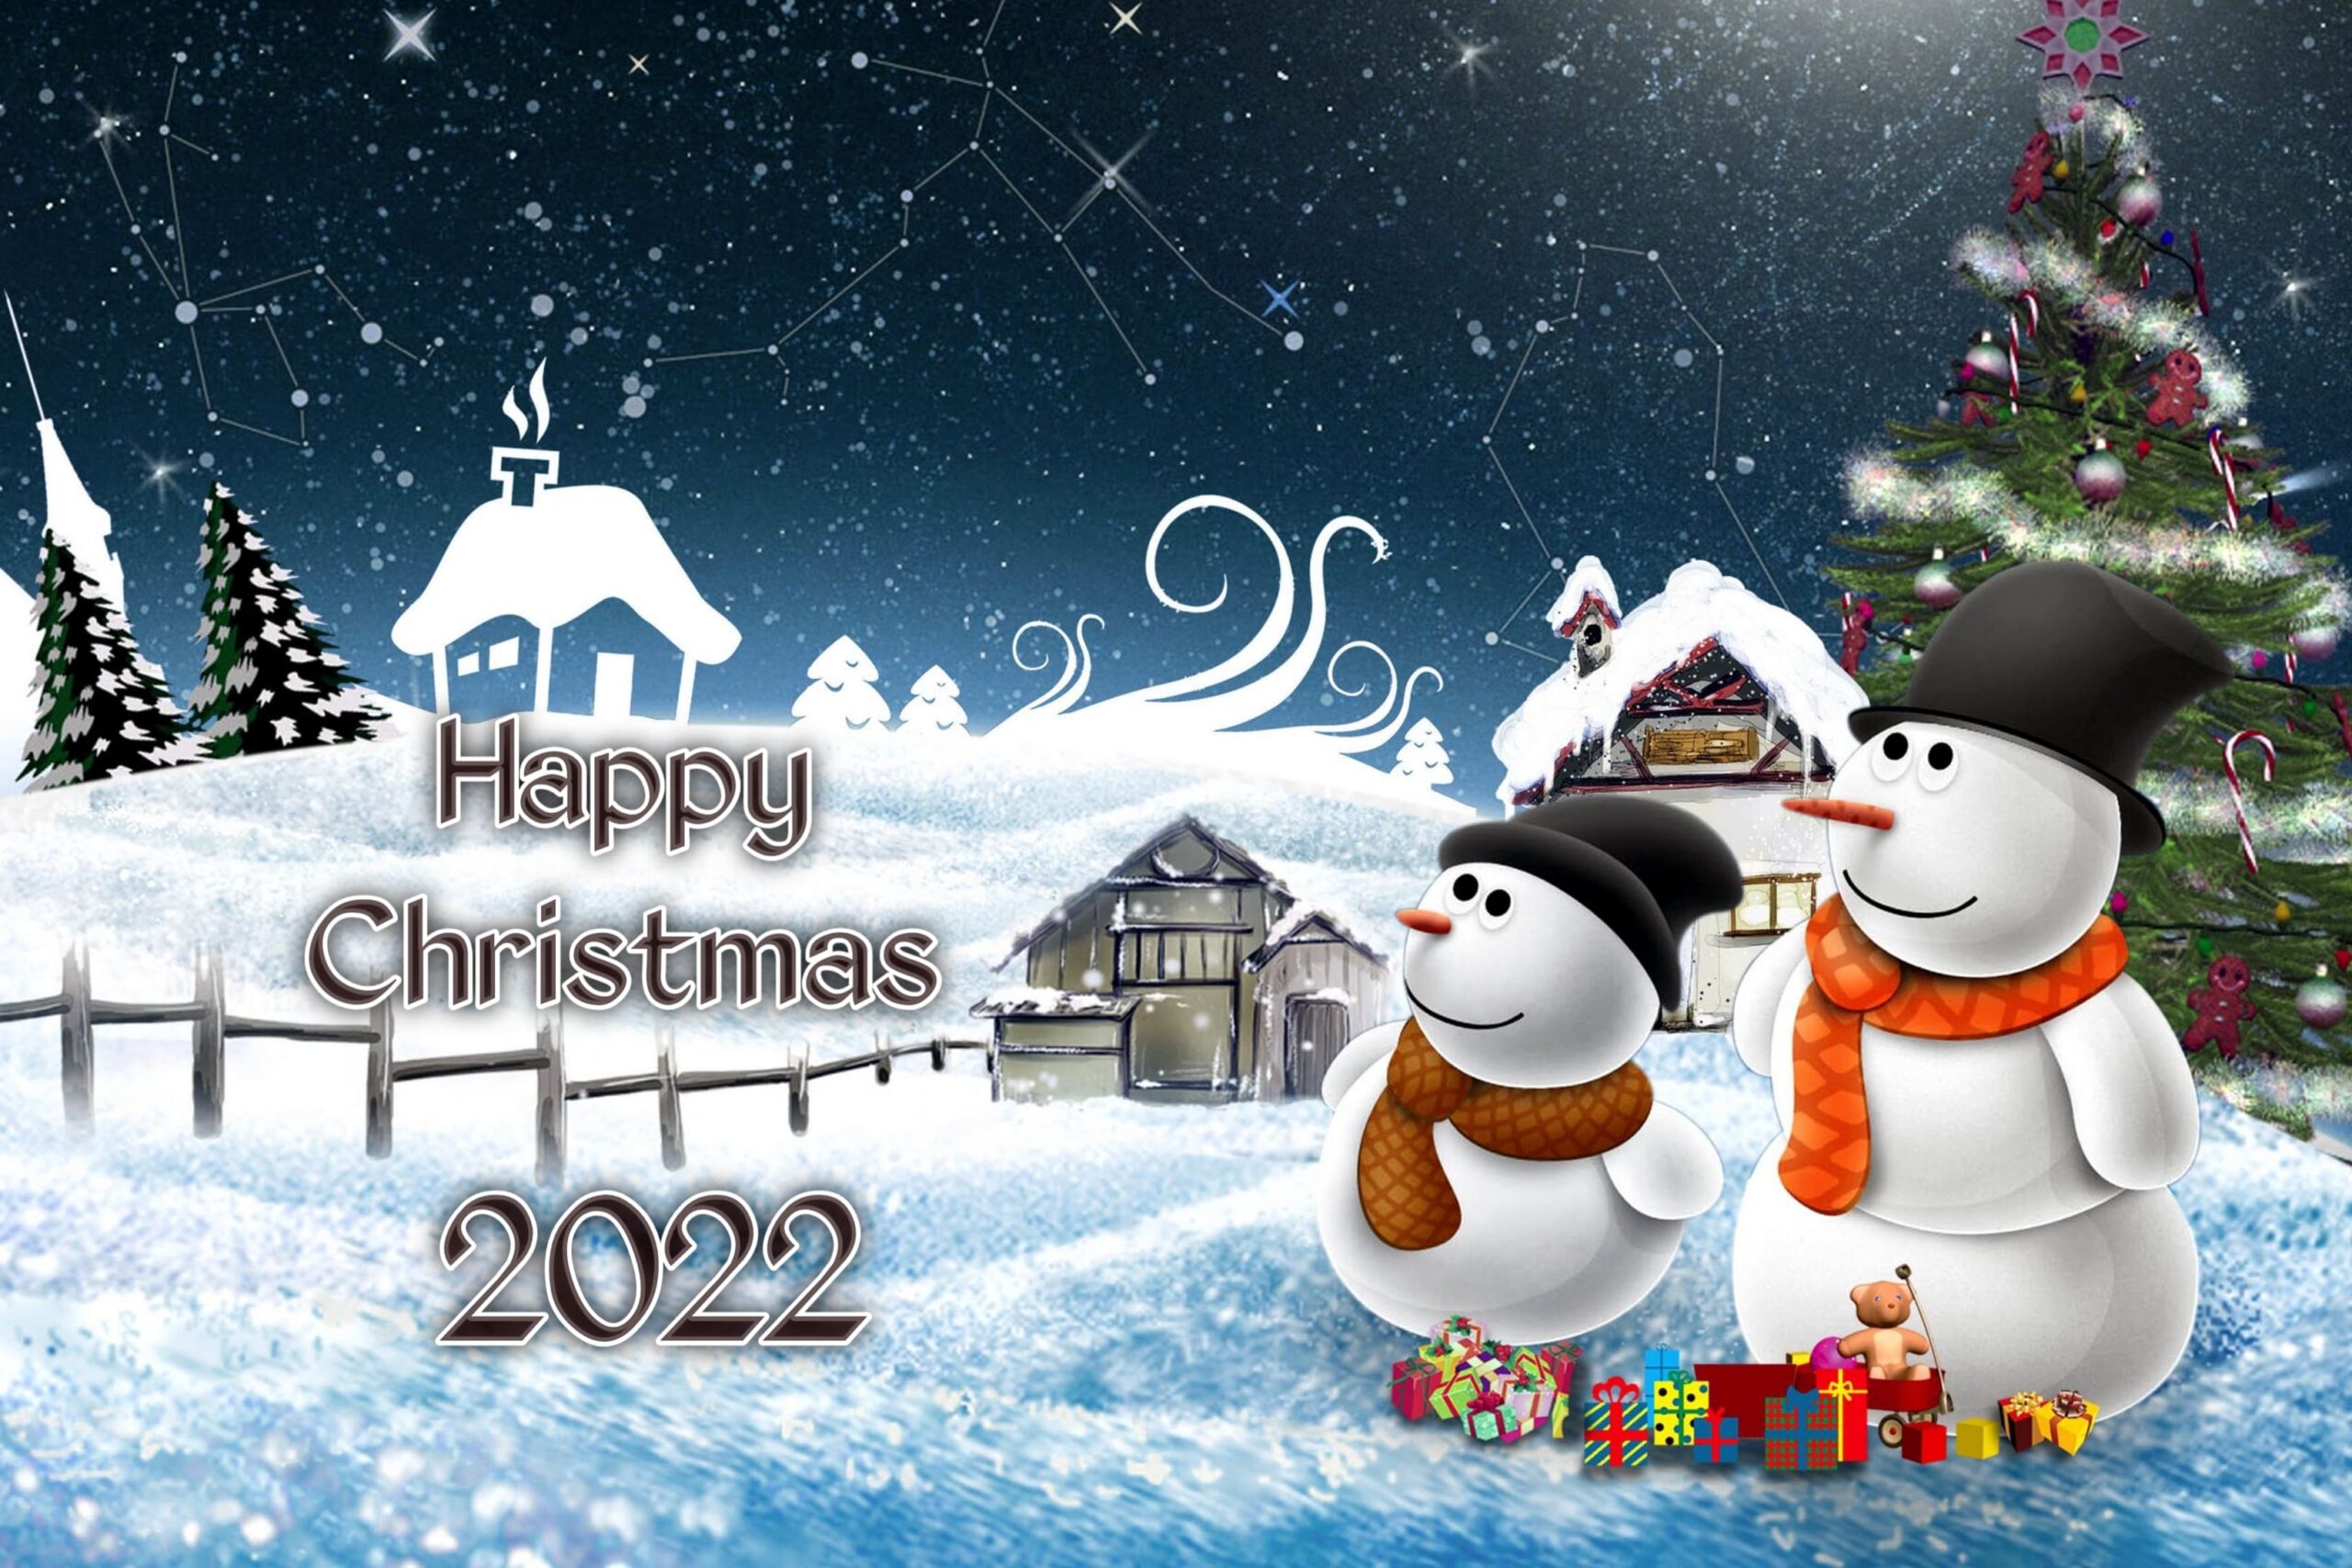 merry christmas tree wallpaper 2022